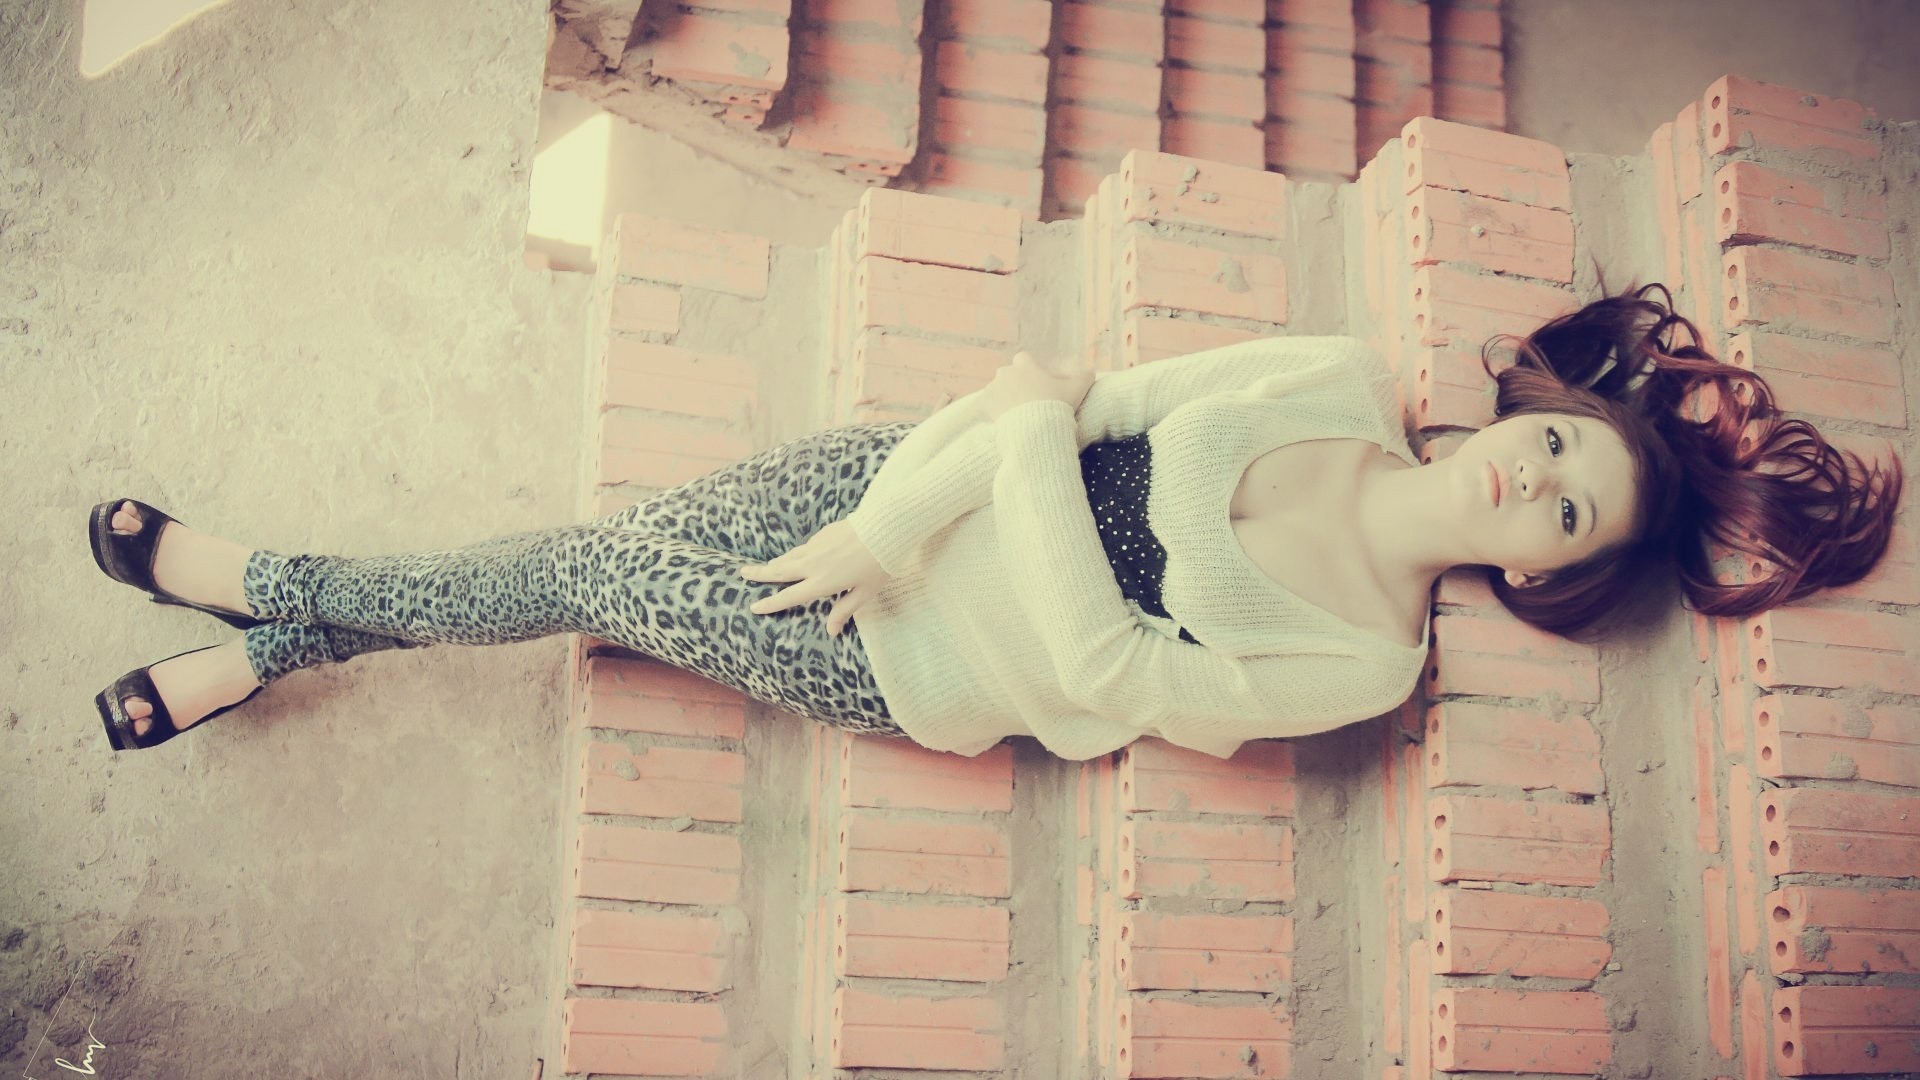 1920x1080  Wallpaper girl, model, style, shoes, leggings, blouse, brick,